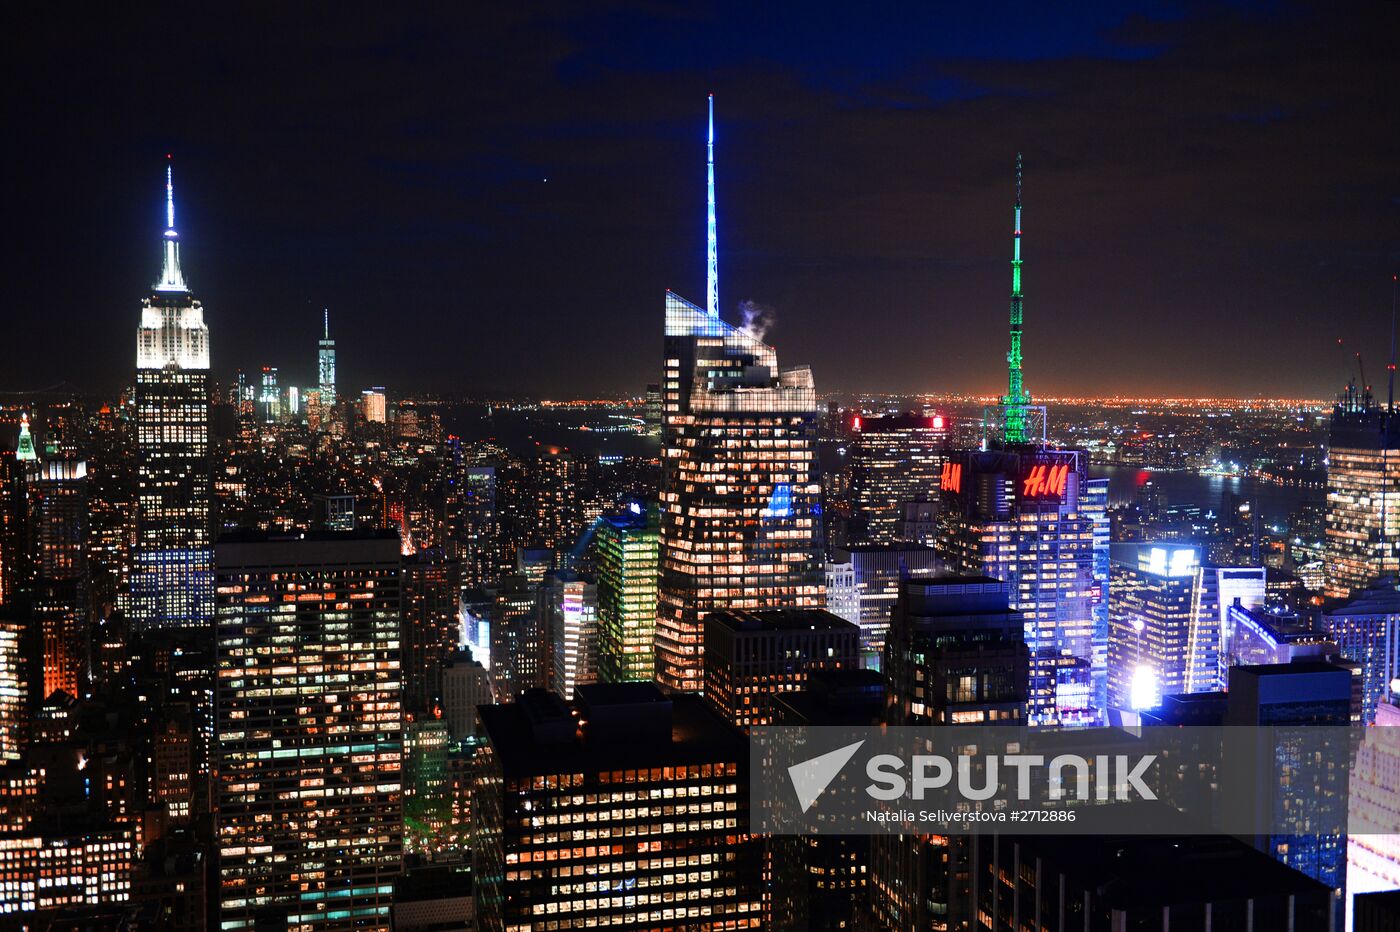 Cities of the world. New York